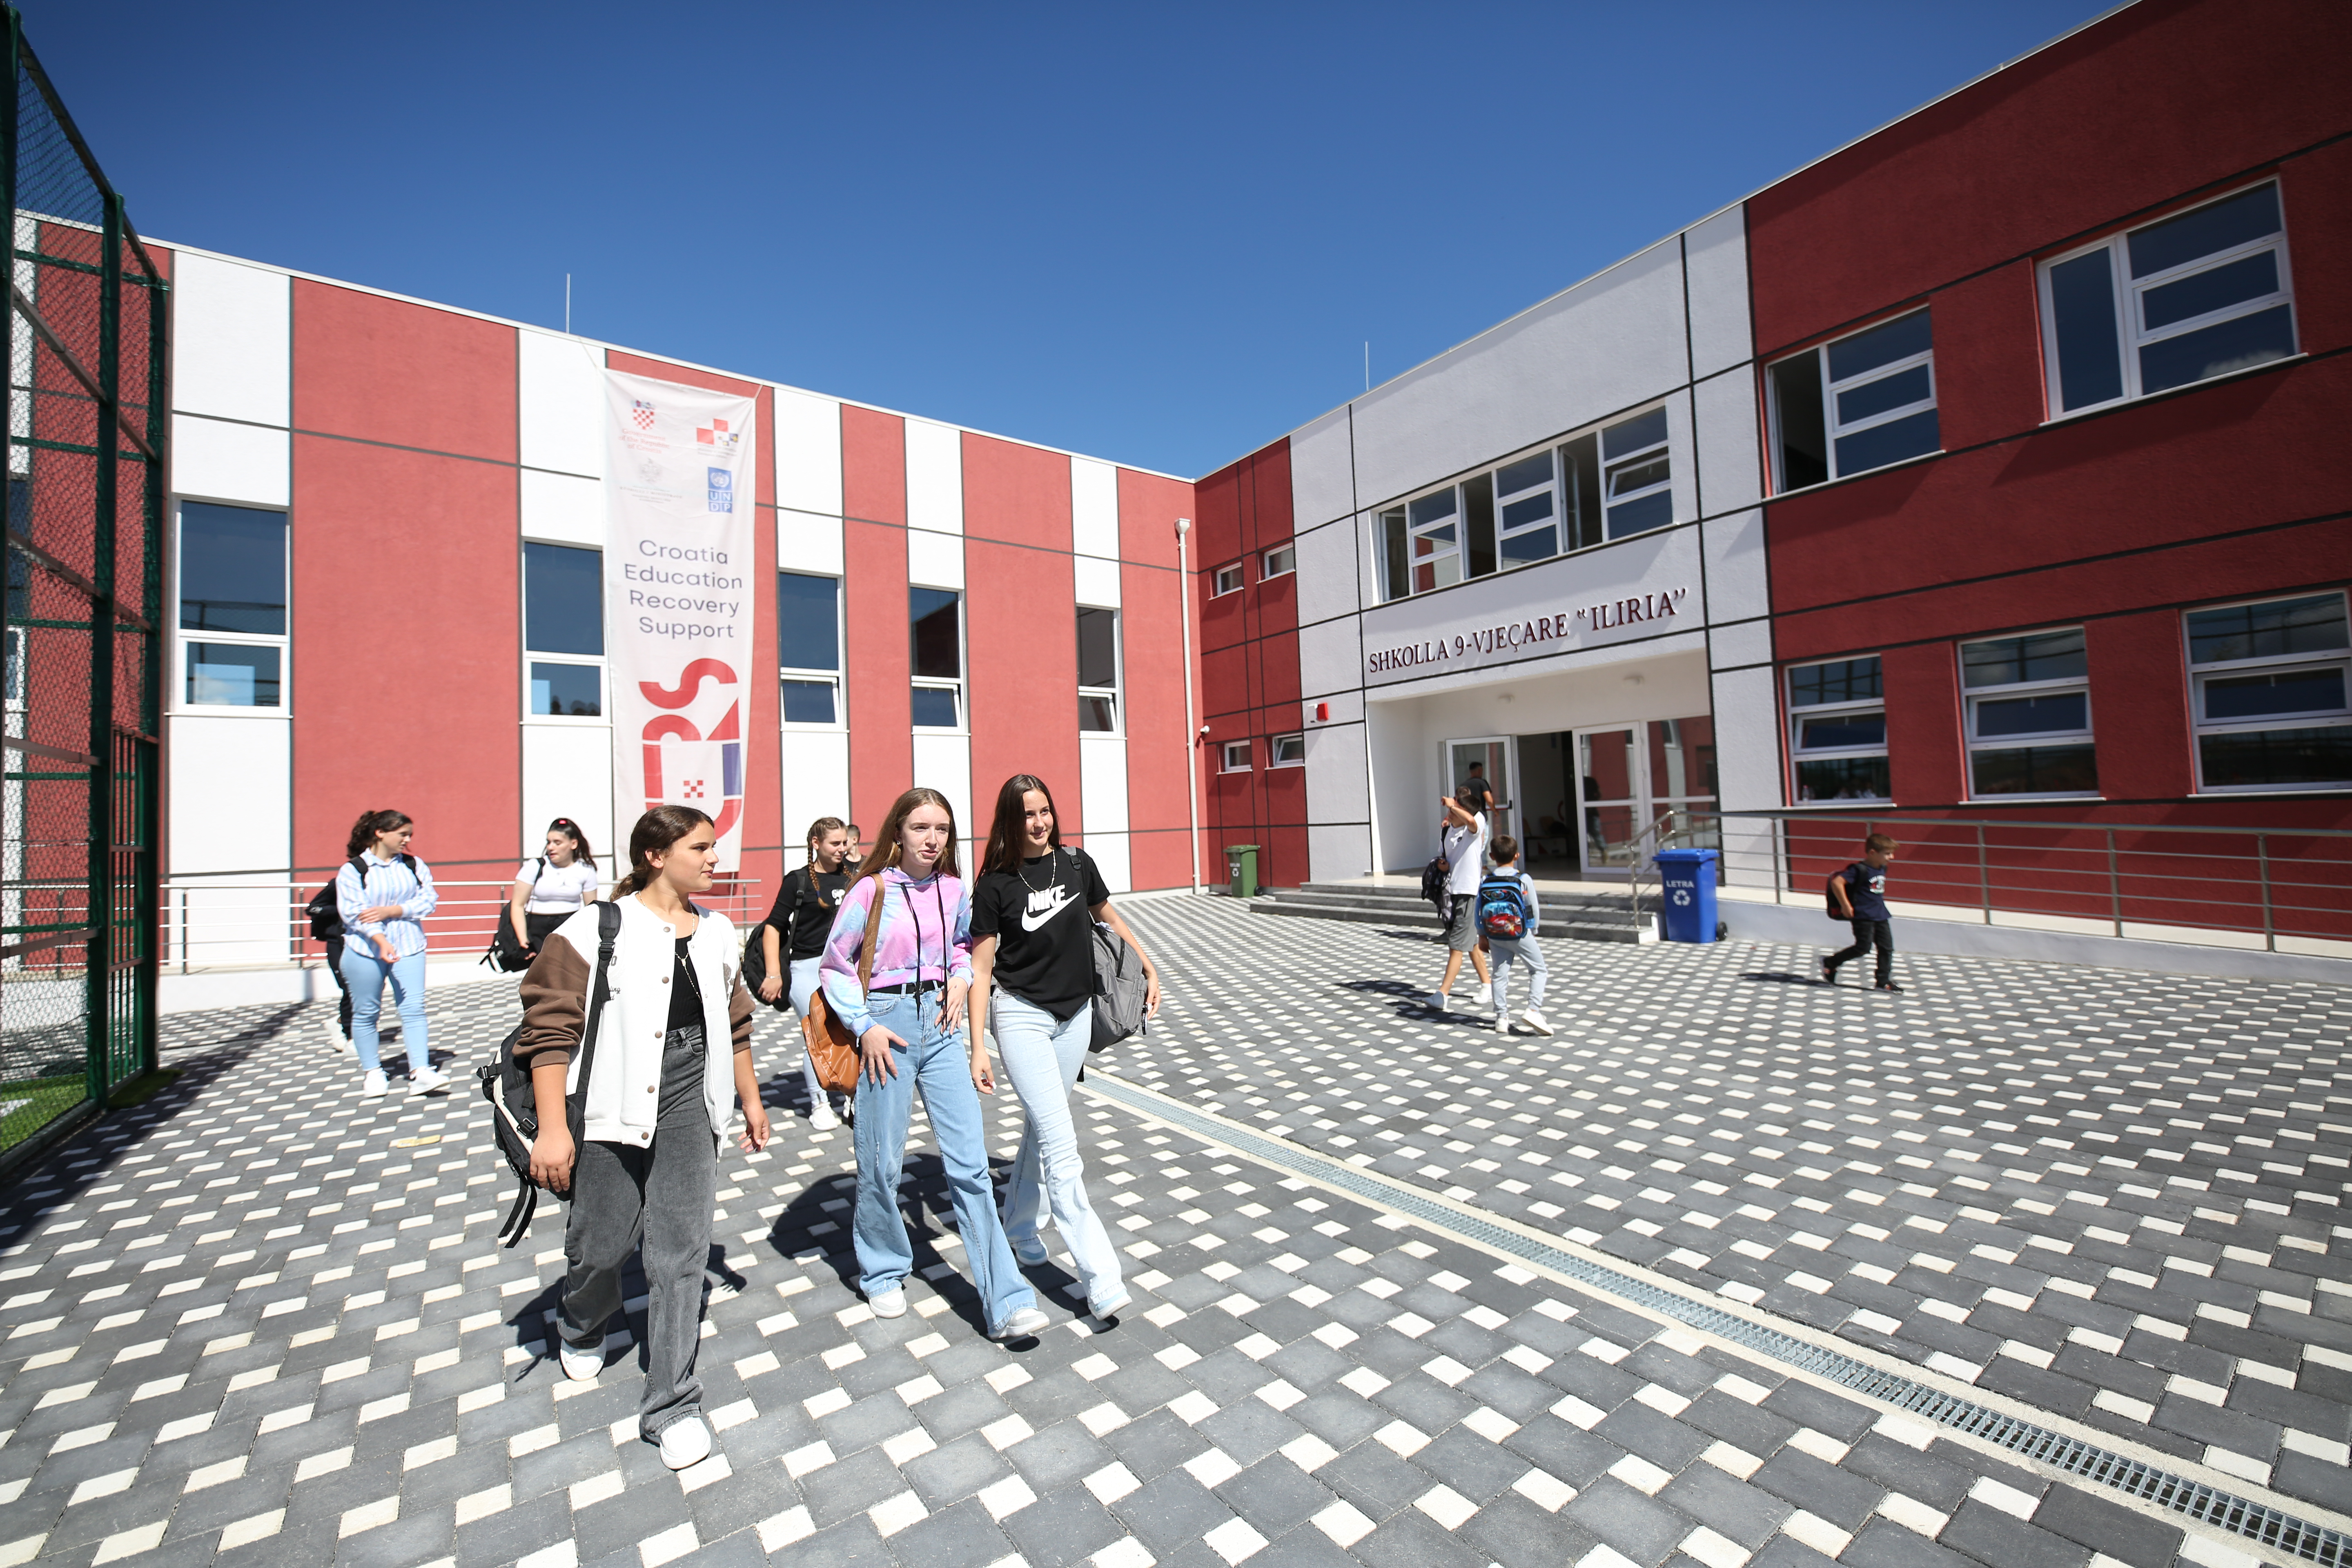 “Iliria 9-year school” in Fushe Kruje. 